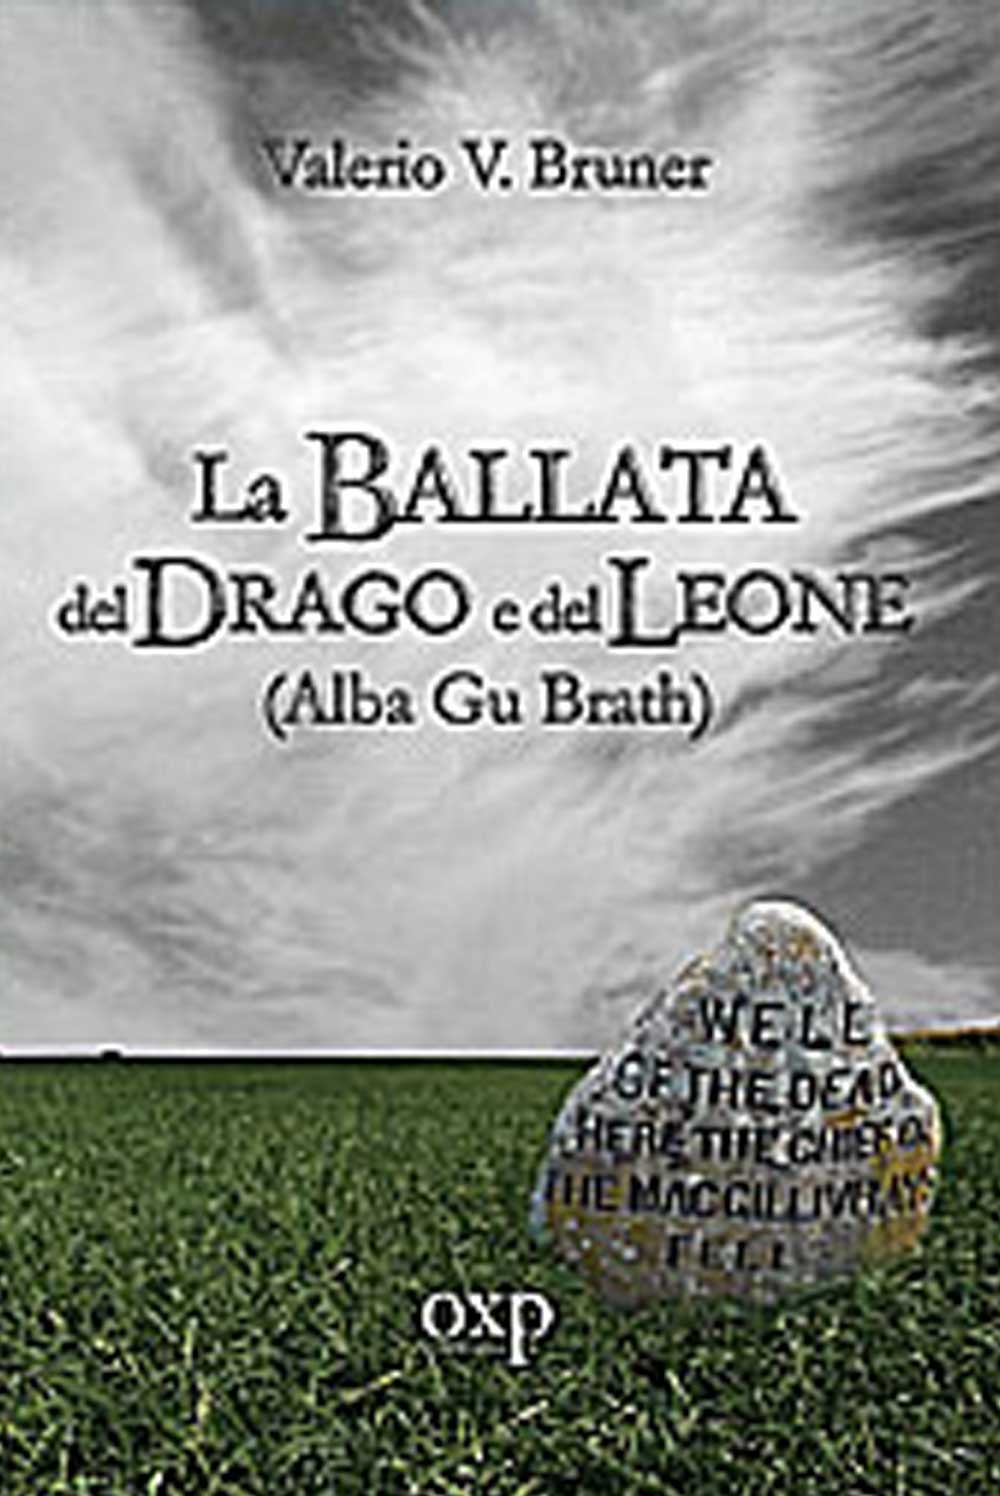 https://www.amazon.it/ballata-drago-leone-Alba-Brath/dp/8895007409